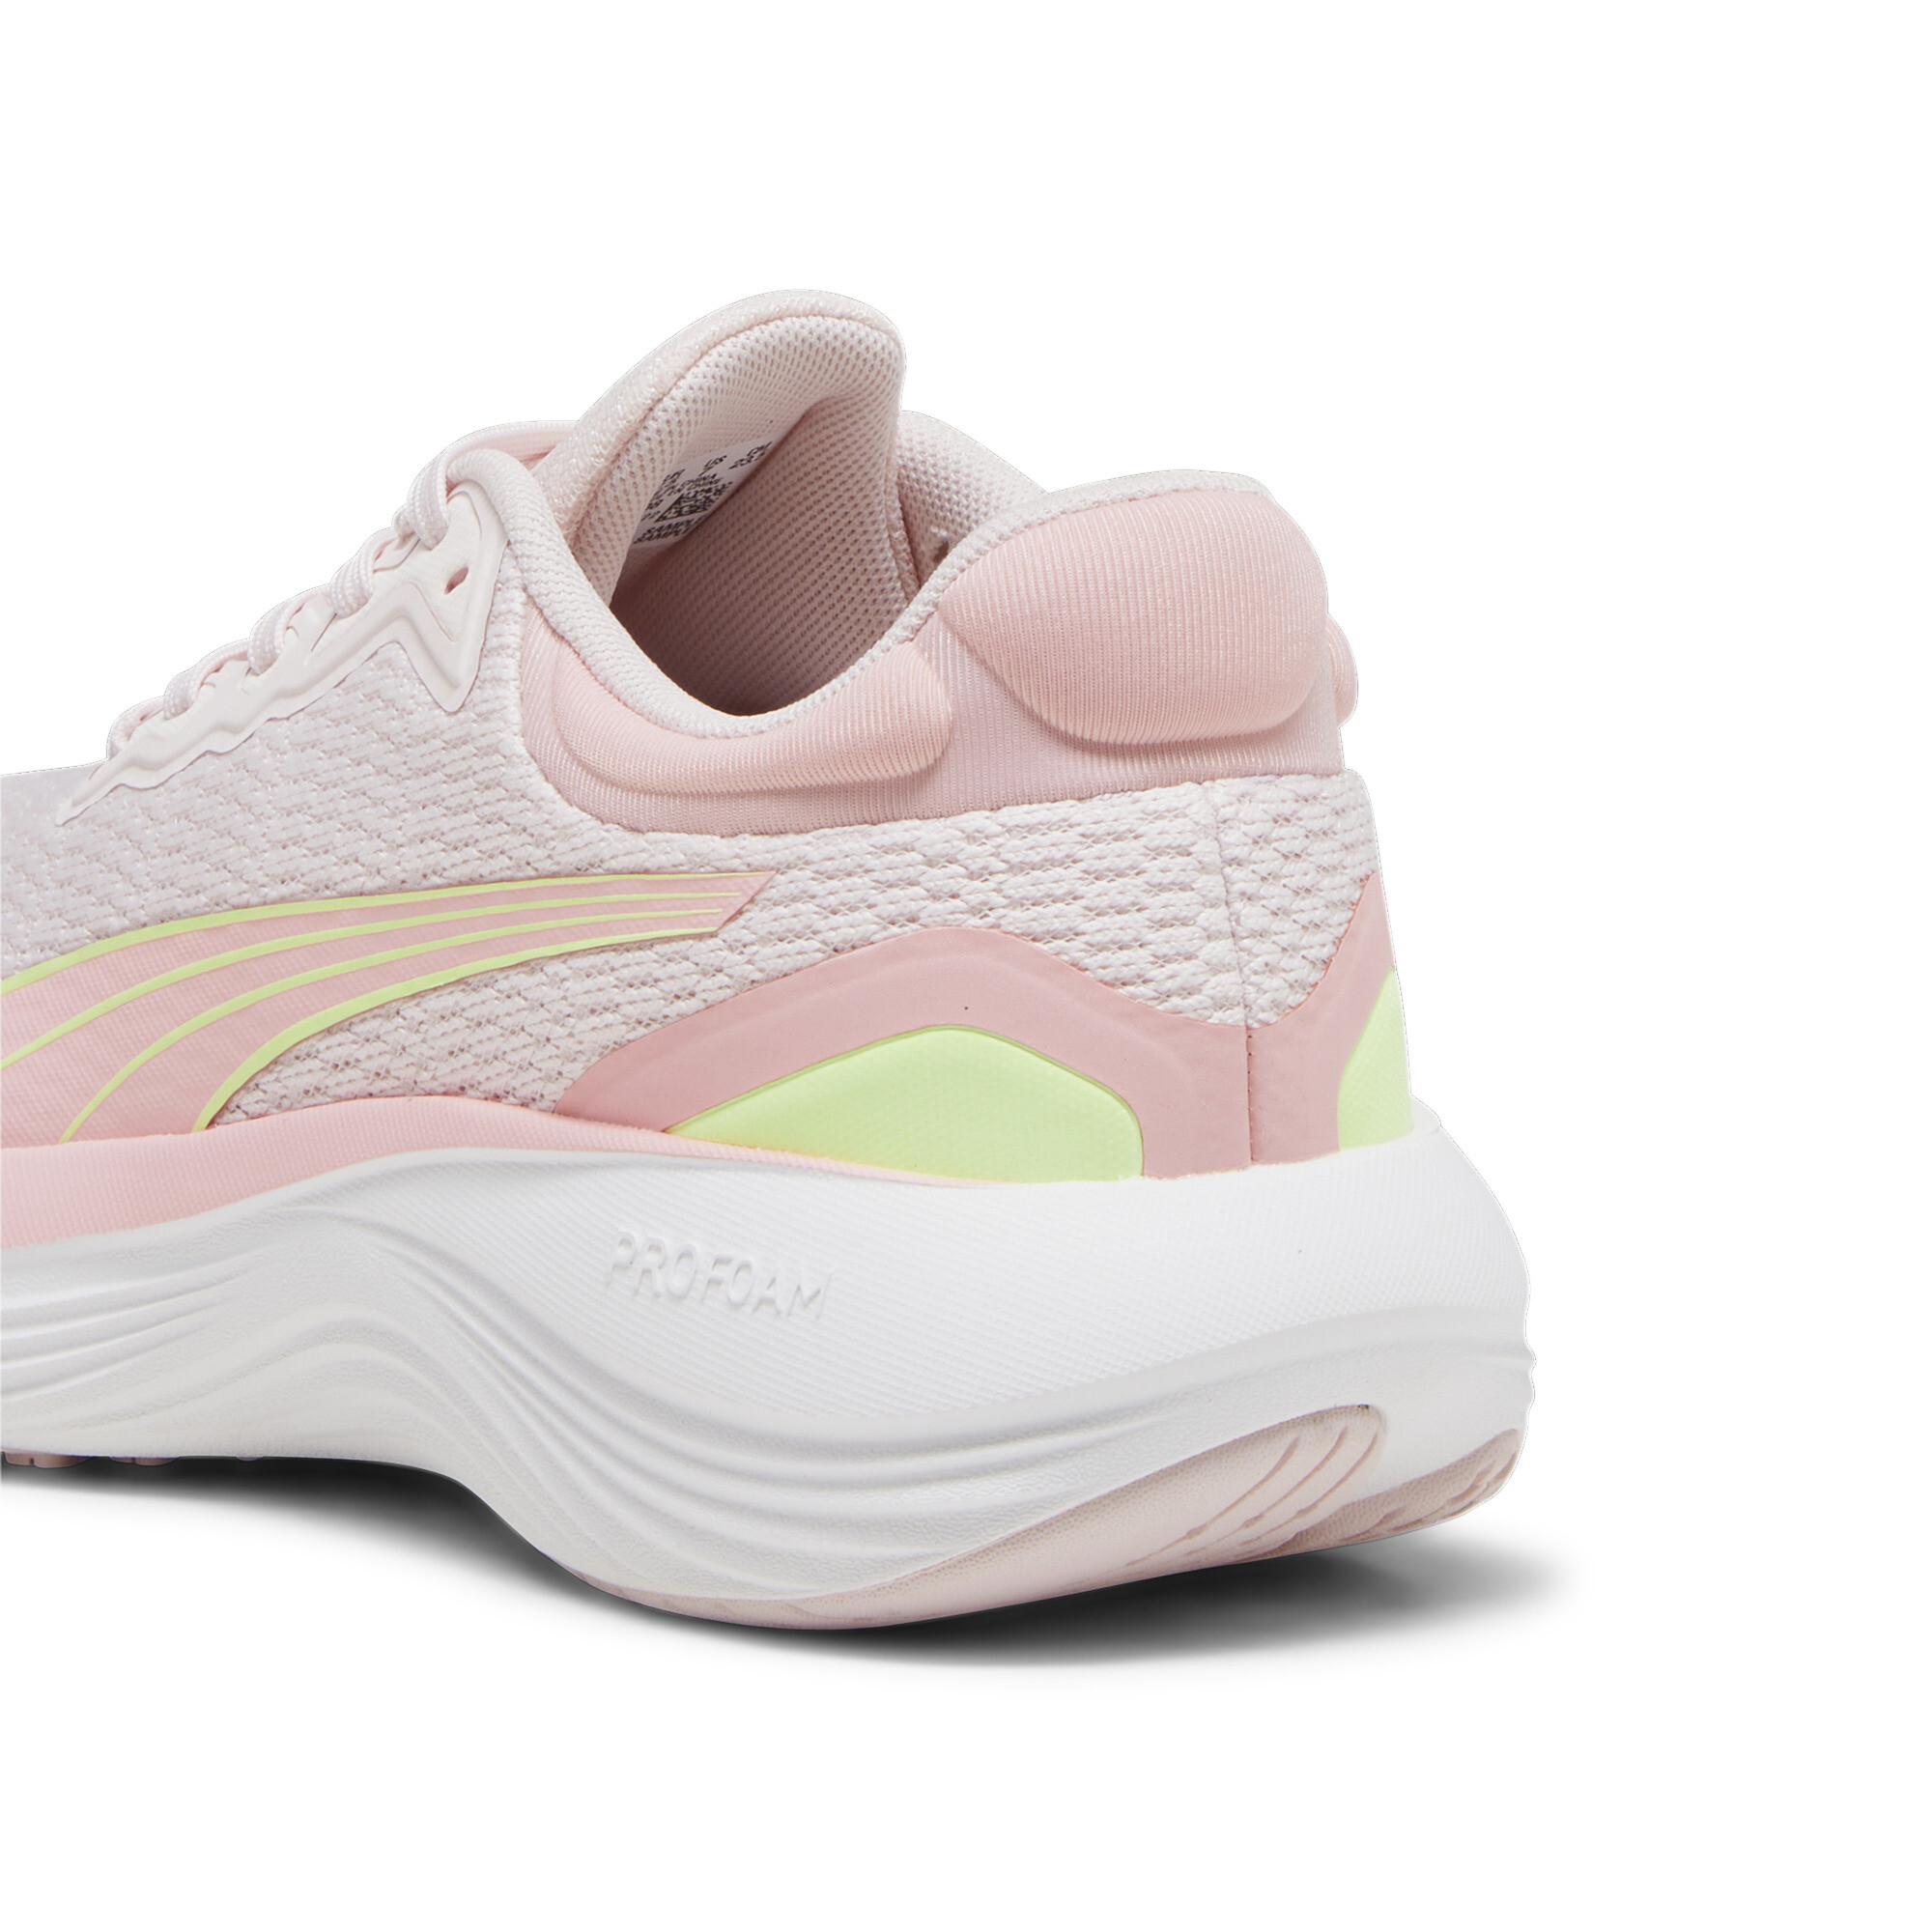 Men's PUMA Scend Pro Running Shoes In Pink, Size EU 42.5